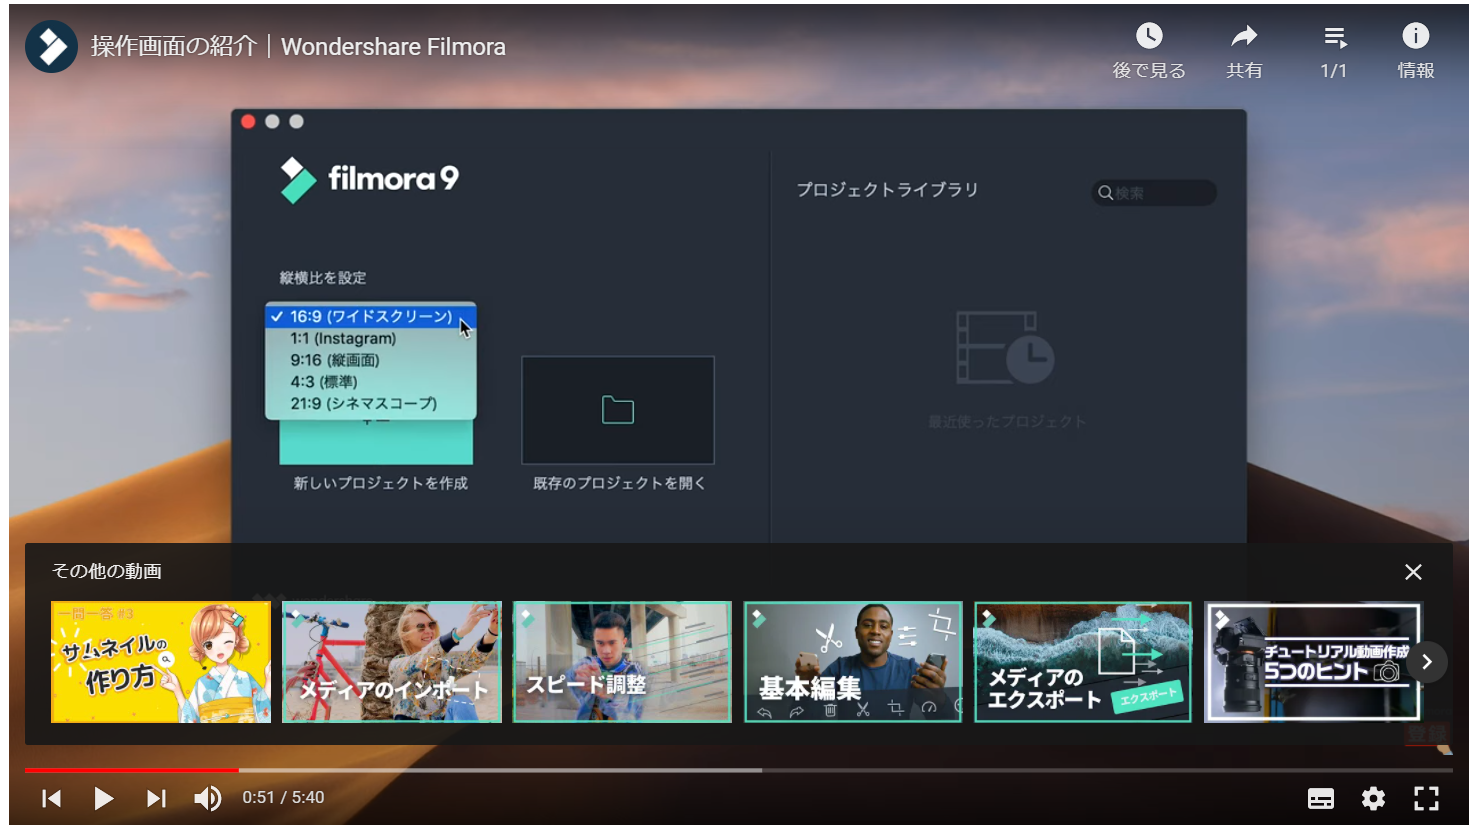 Filmora（フィモーラ）公式ホームページのチュートリアル動画「操作画面の紹介」のページ